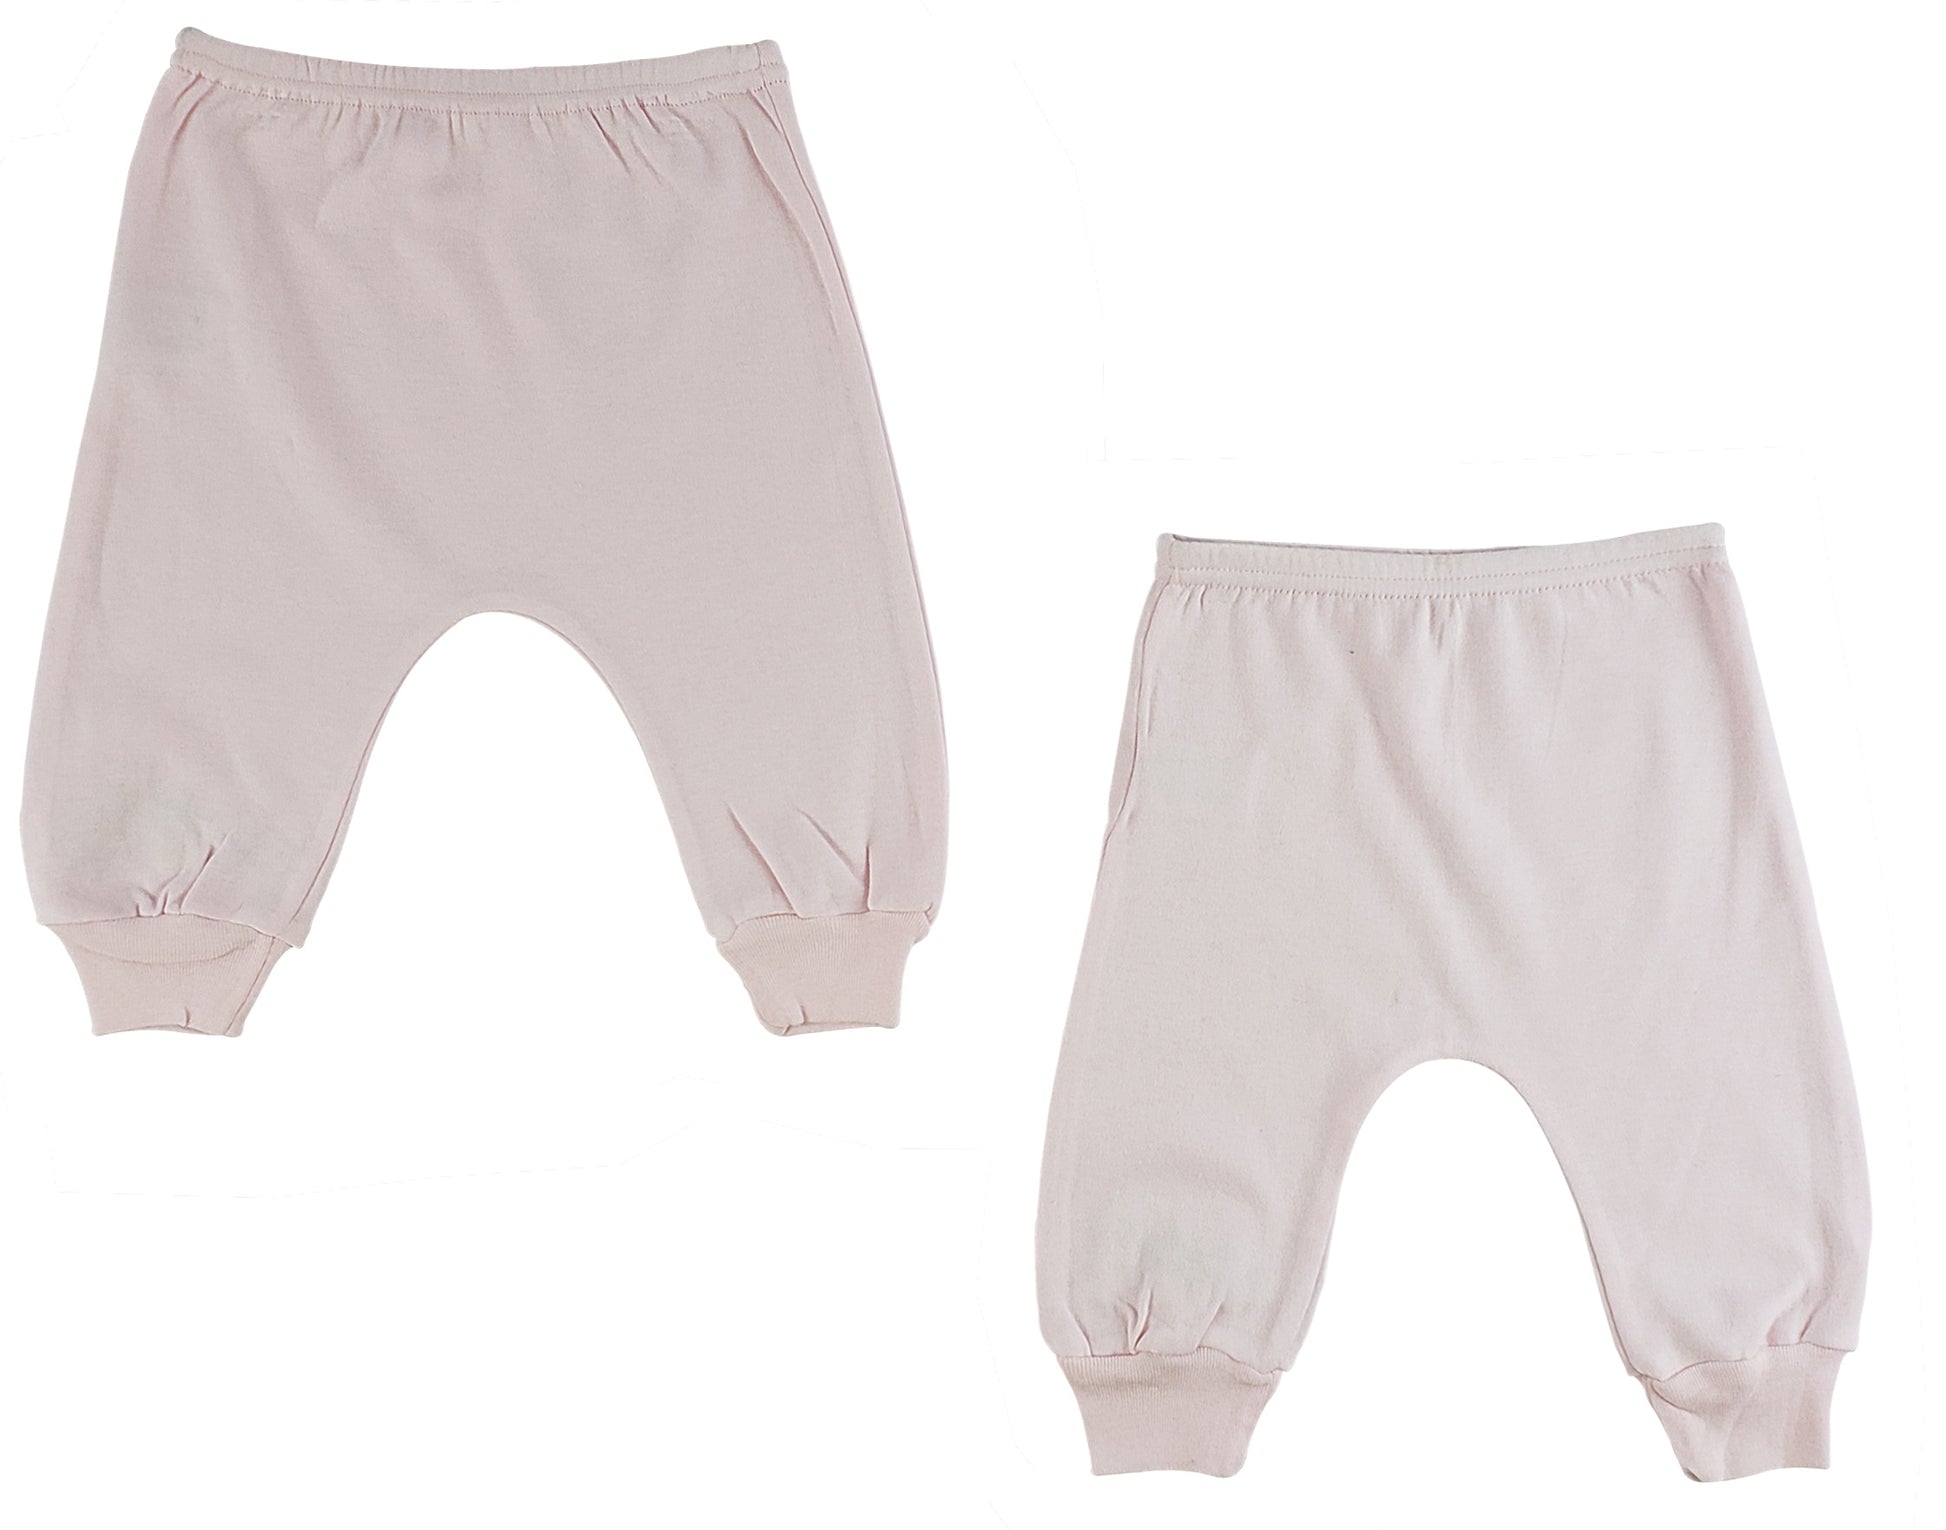 Infant Pink Jogger Pants - 2 Pack CS_0556